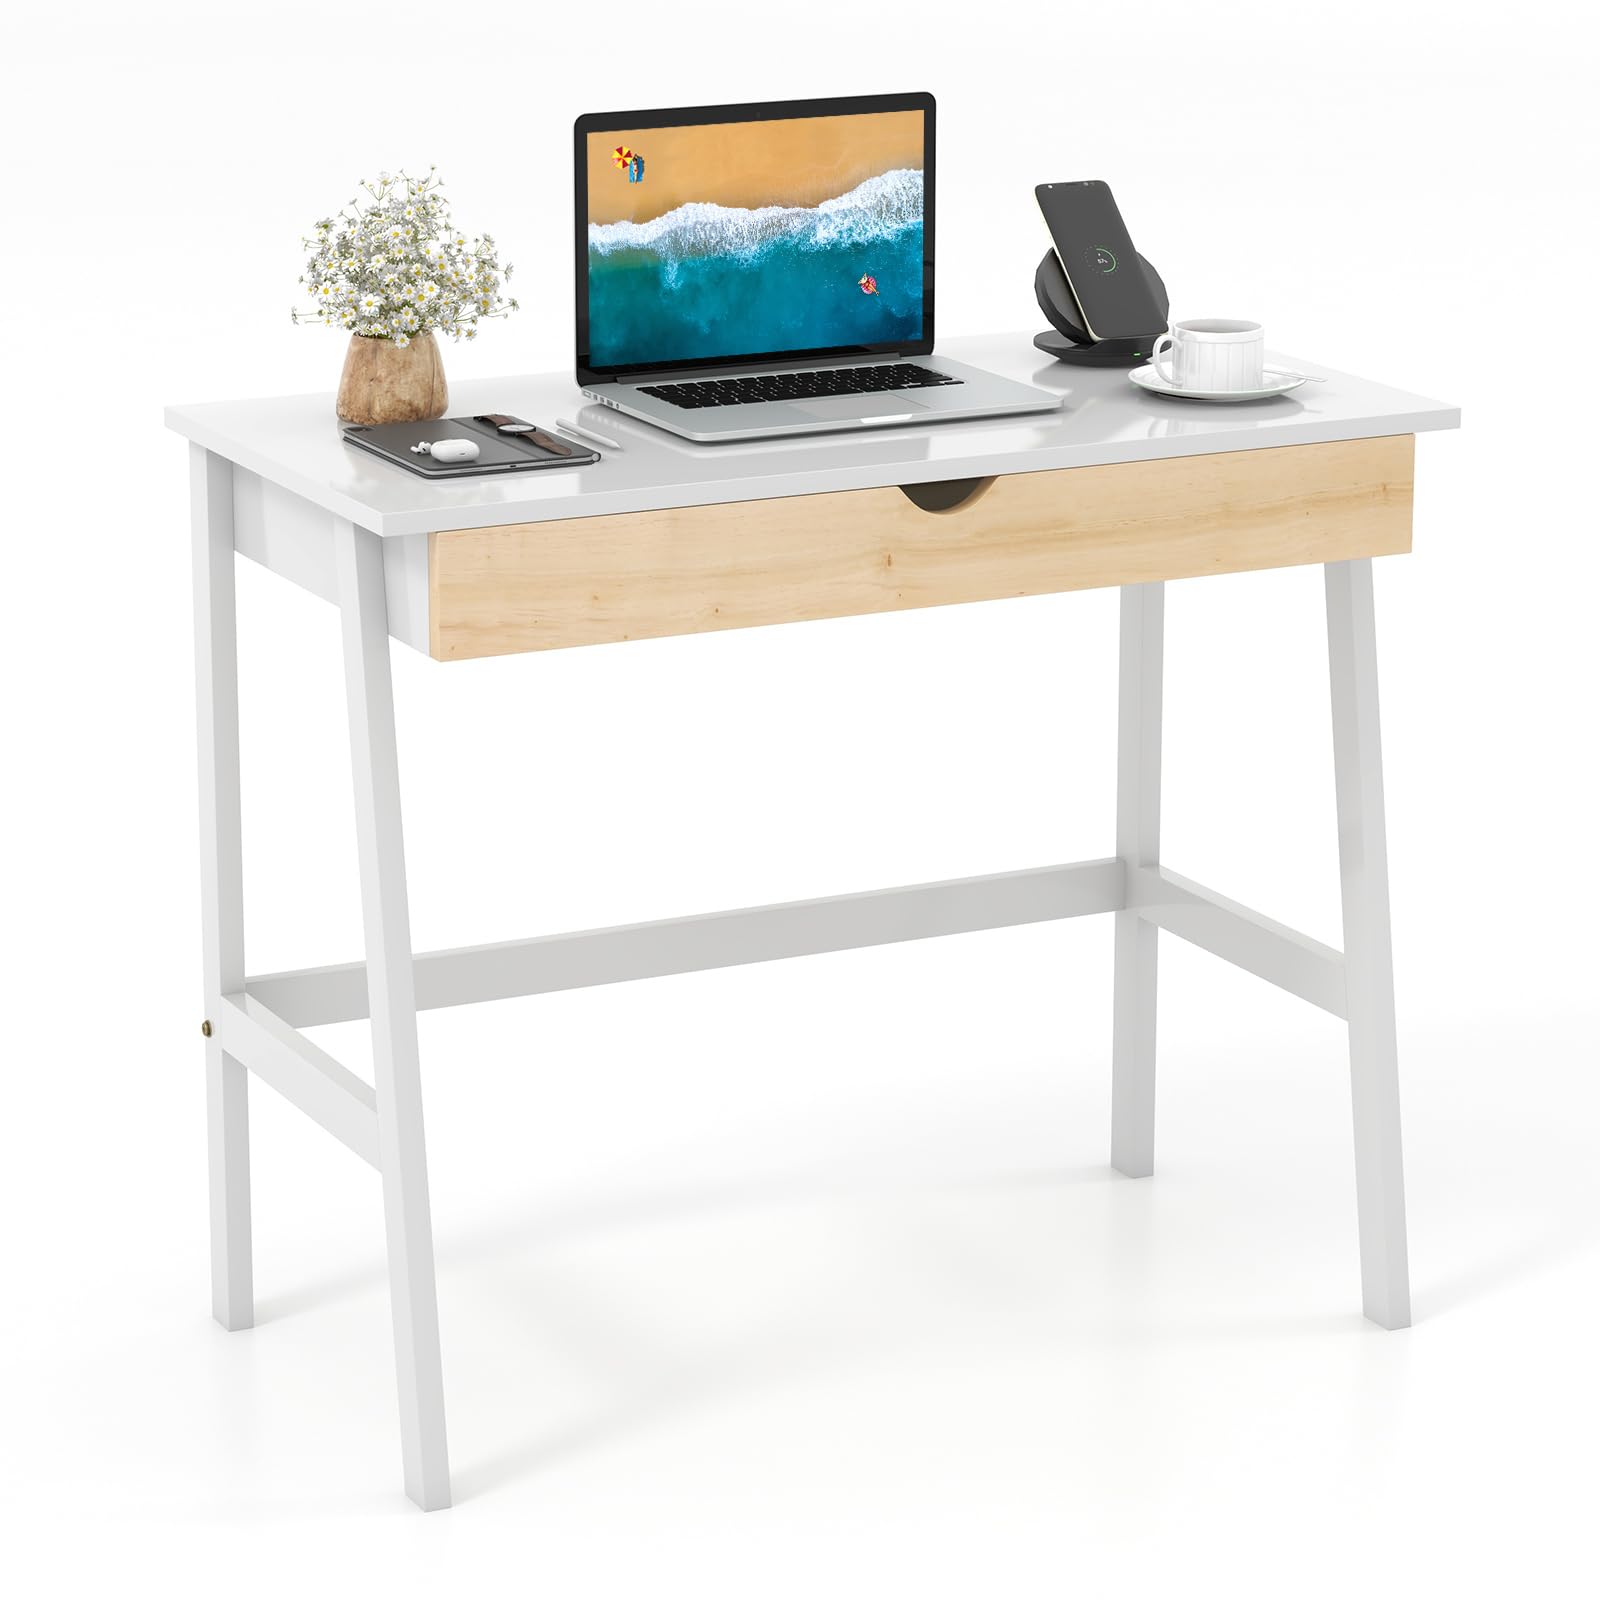 Giantex Modern Writing Desk with Drawer